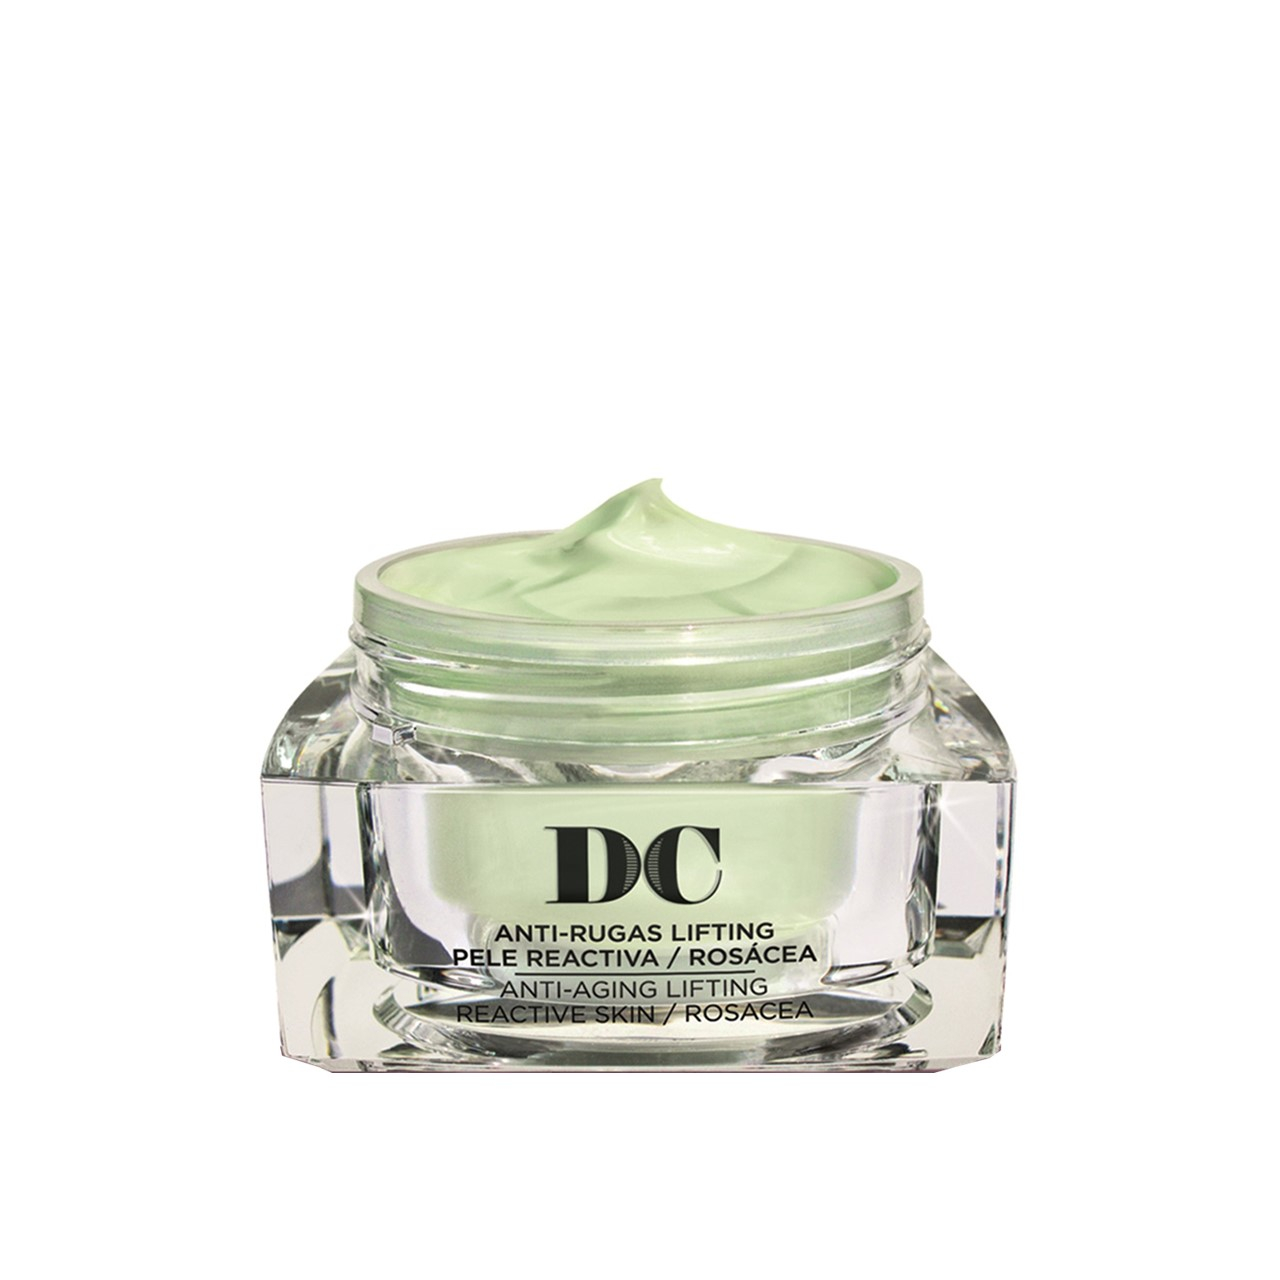 DC Anti-Aging Lifting Cream for Reactive Skin/Rosacea 50ml (1.69fl oz)